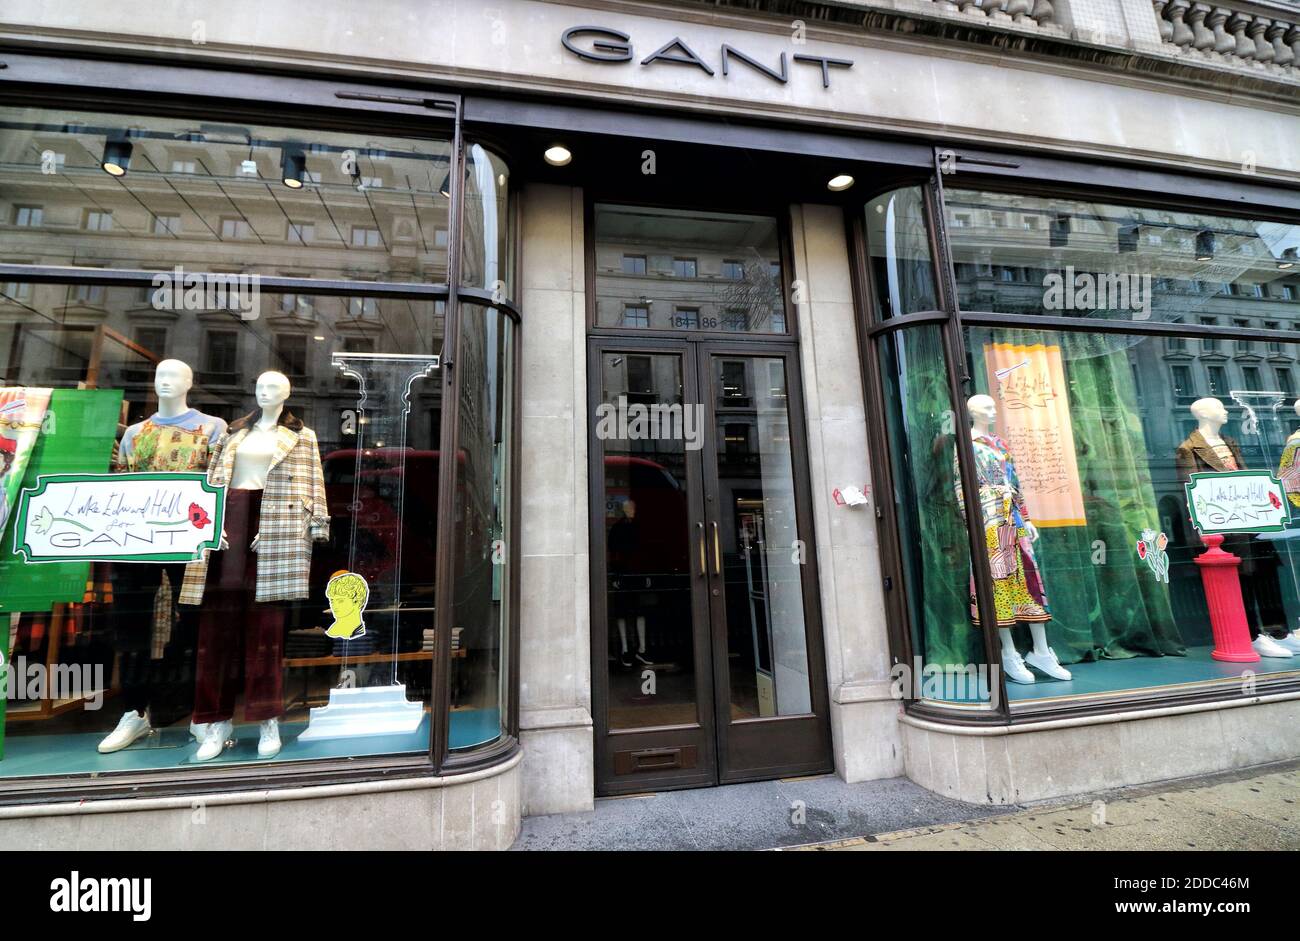 US Clothing store Gant on Regent Street Stock Photo - Alamy